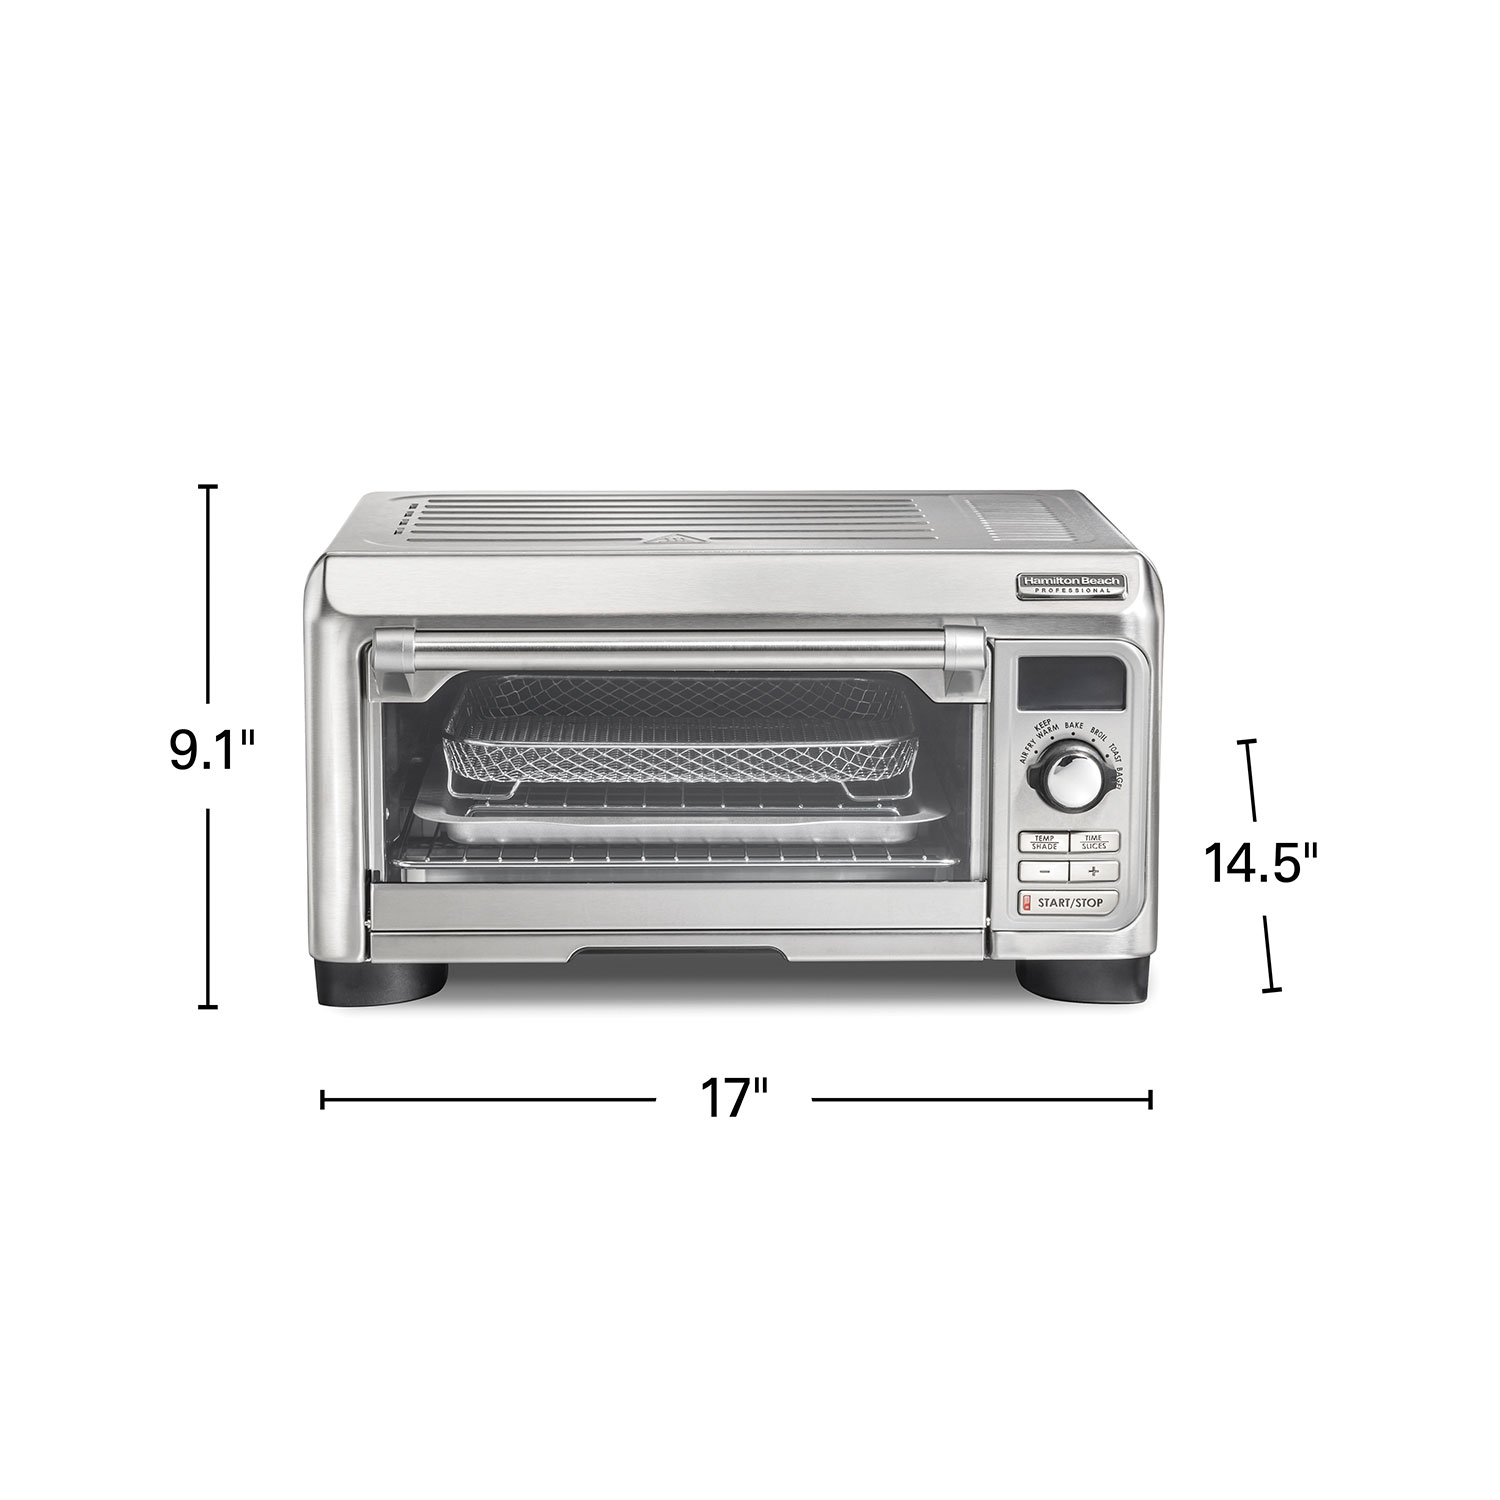 Hamilton Beach 31241 Professional Sure-Crisp Air Fry Digital Toaster Oven, Stainless Steel